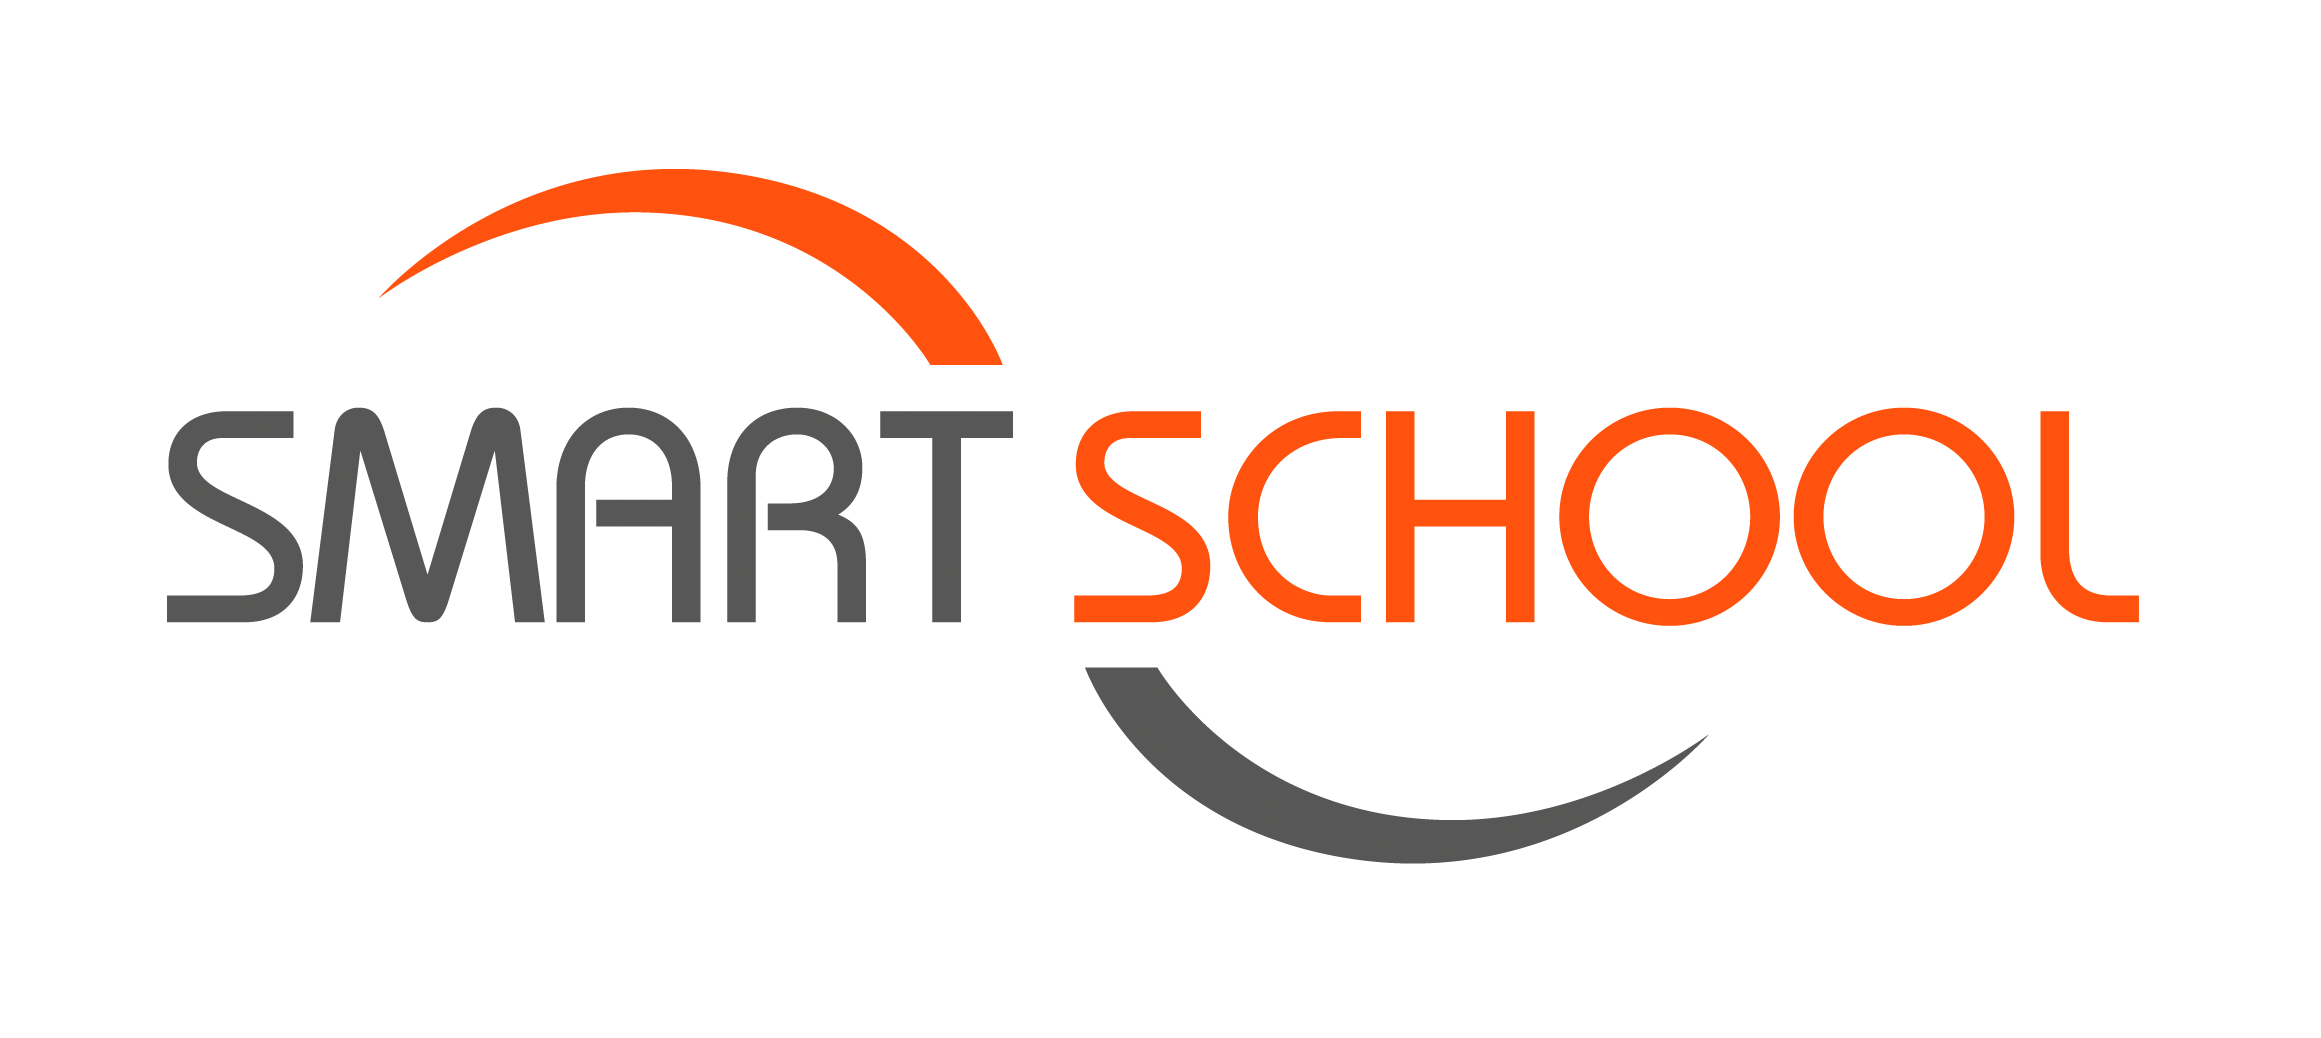 smartschool logo oranje zwart original